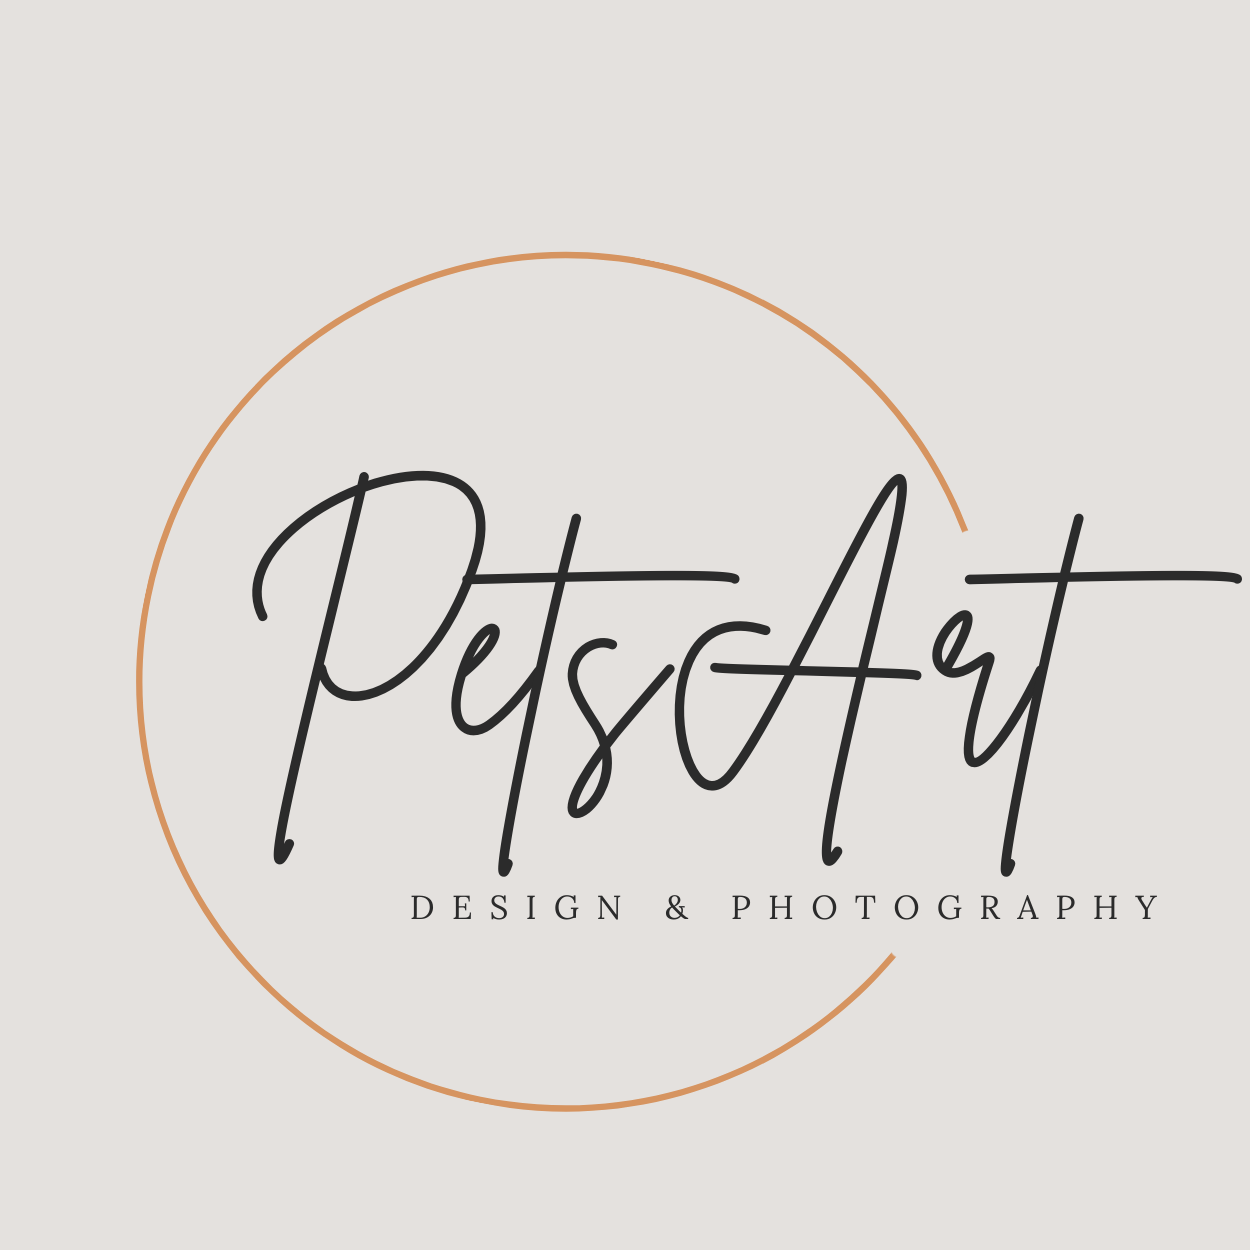 PetsArt Design